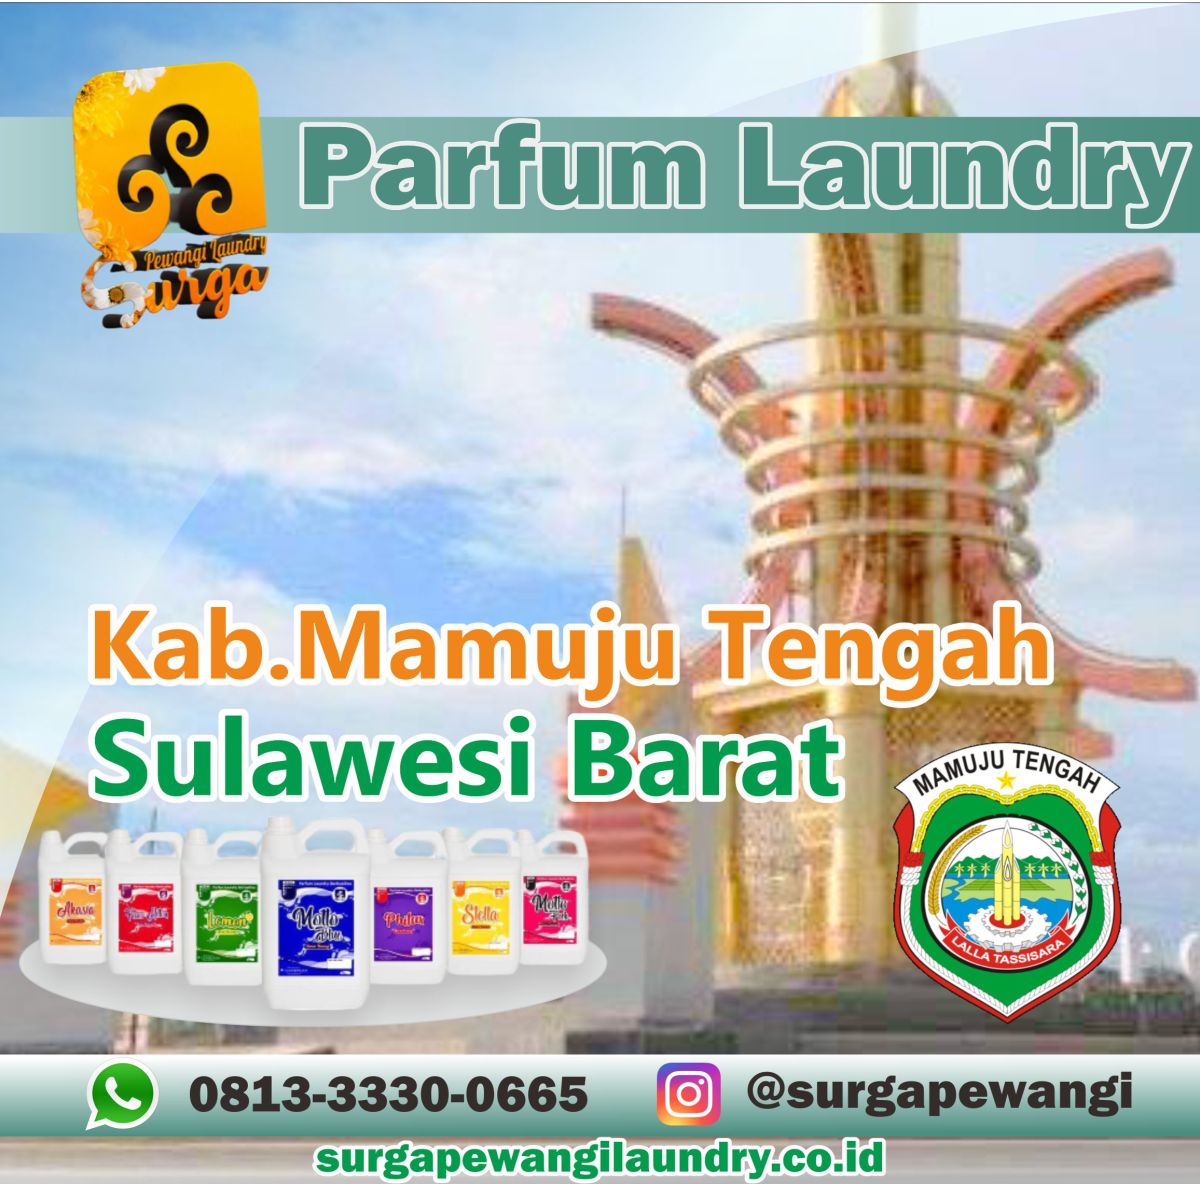 Parfum Laundry Kabupaten Mamuju Tengah, Sulawesi Barat